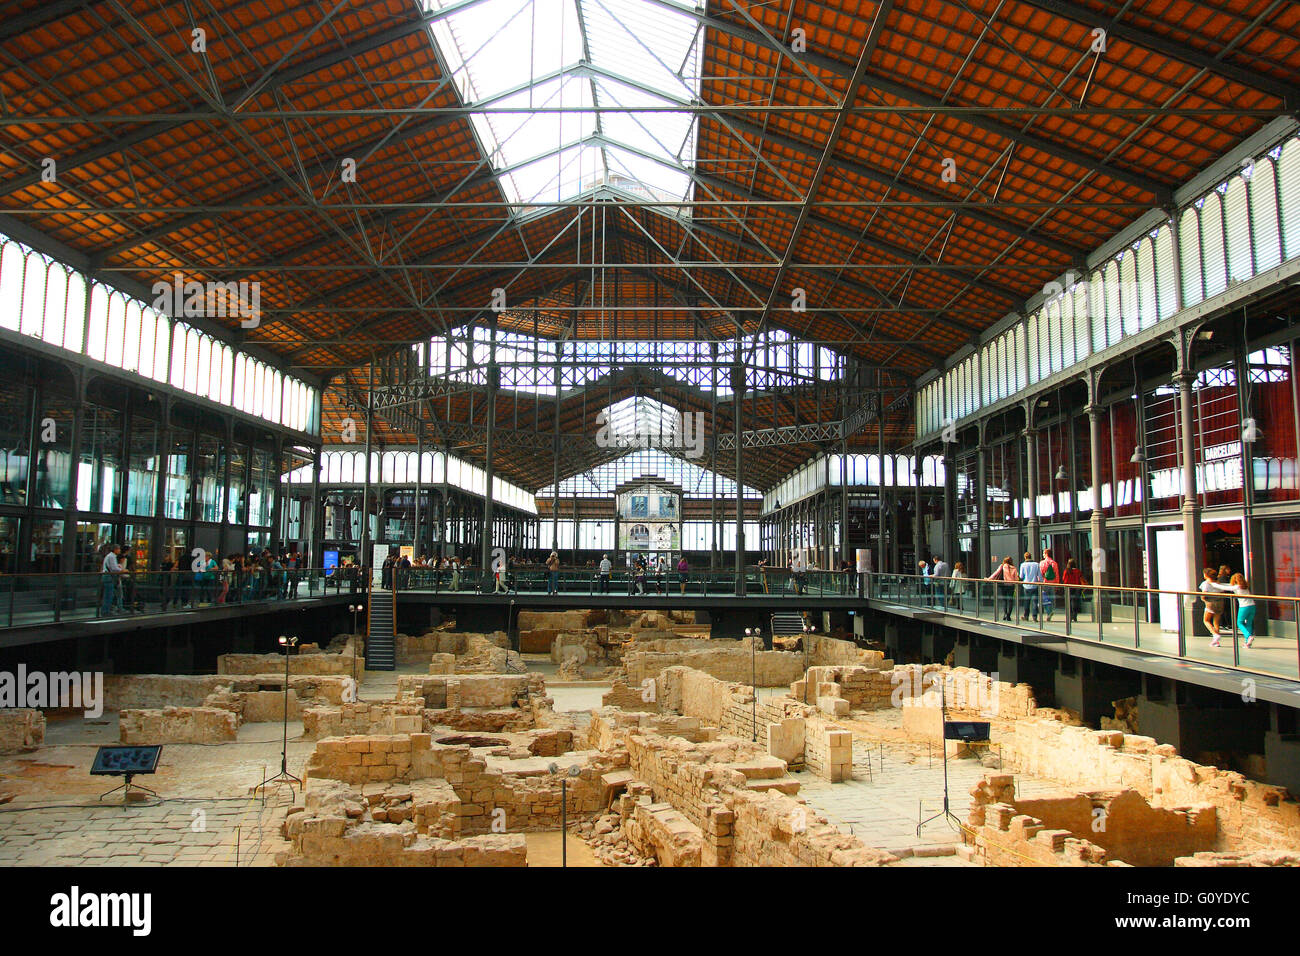 Ruins of the medieval city inside the former Mercat del Born, Barcelona, Catalonia, Spain Stock Photo